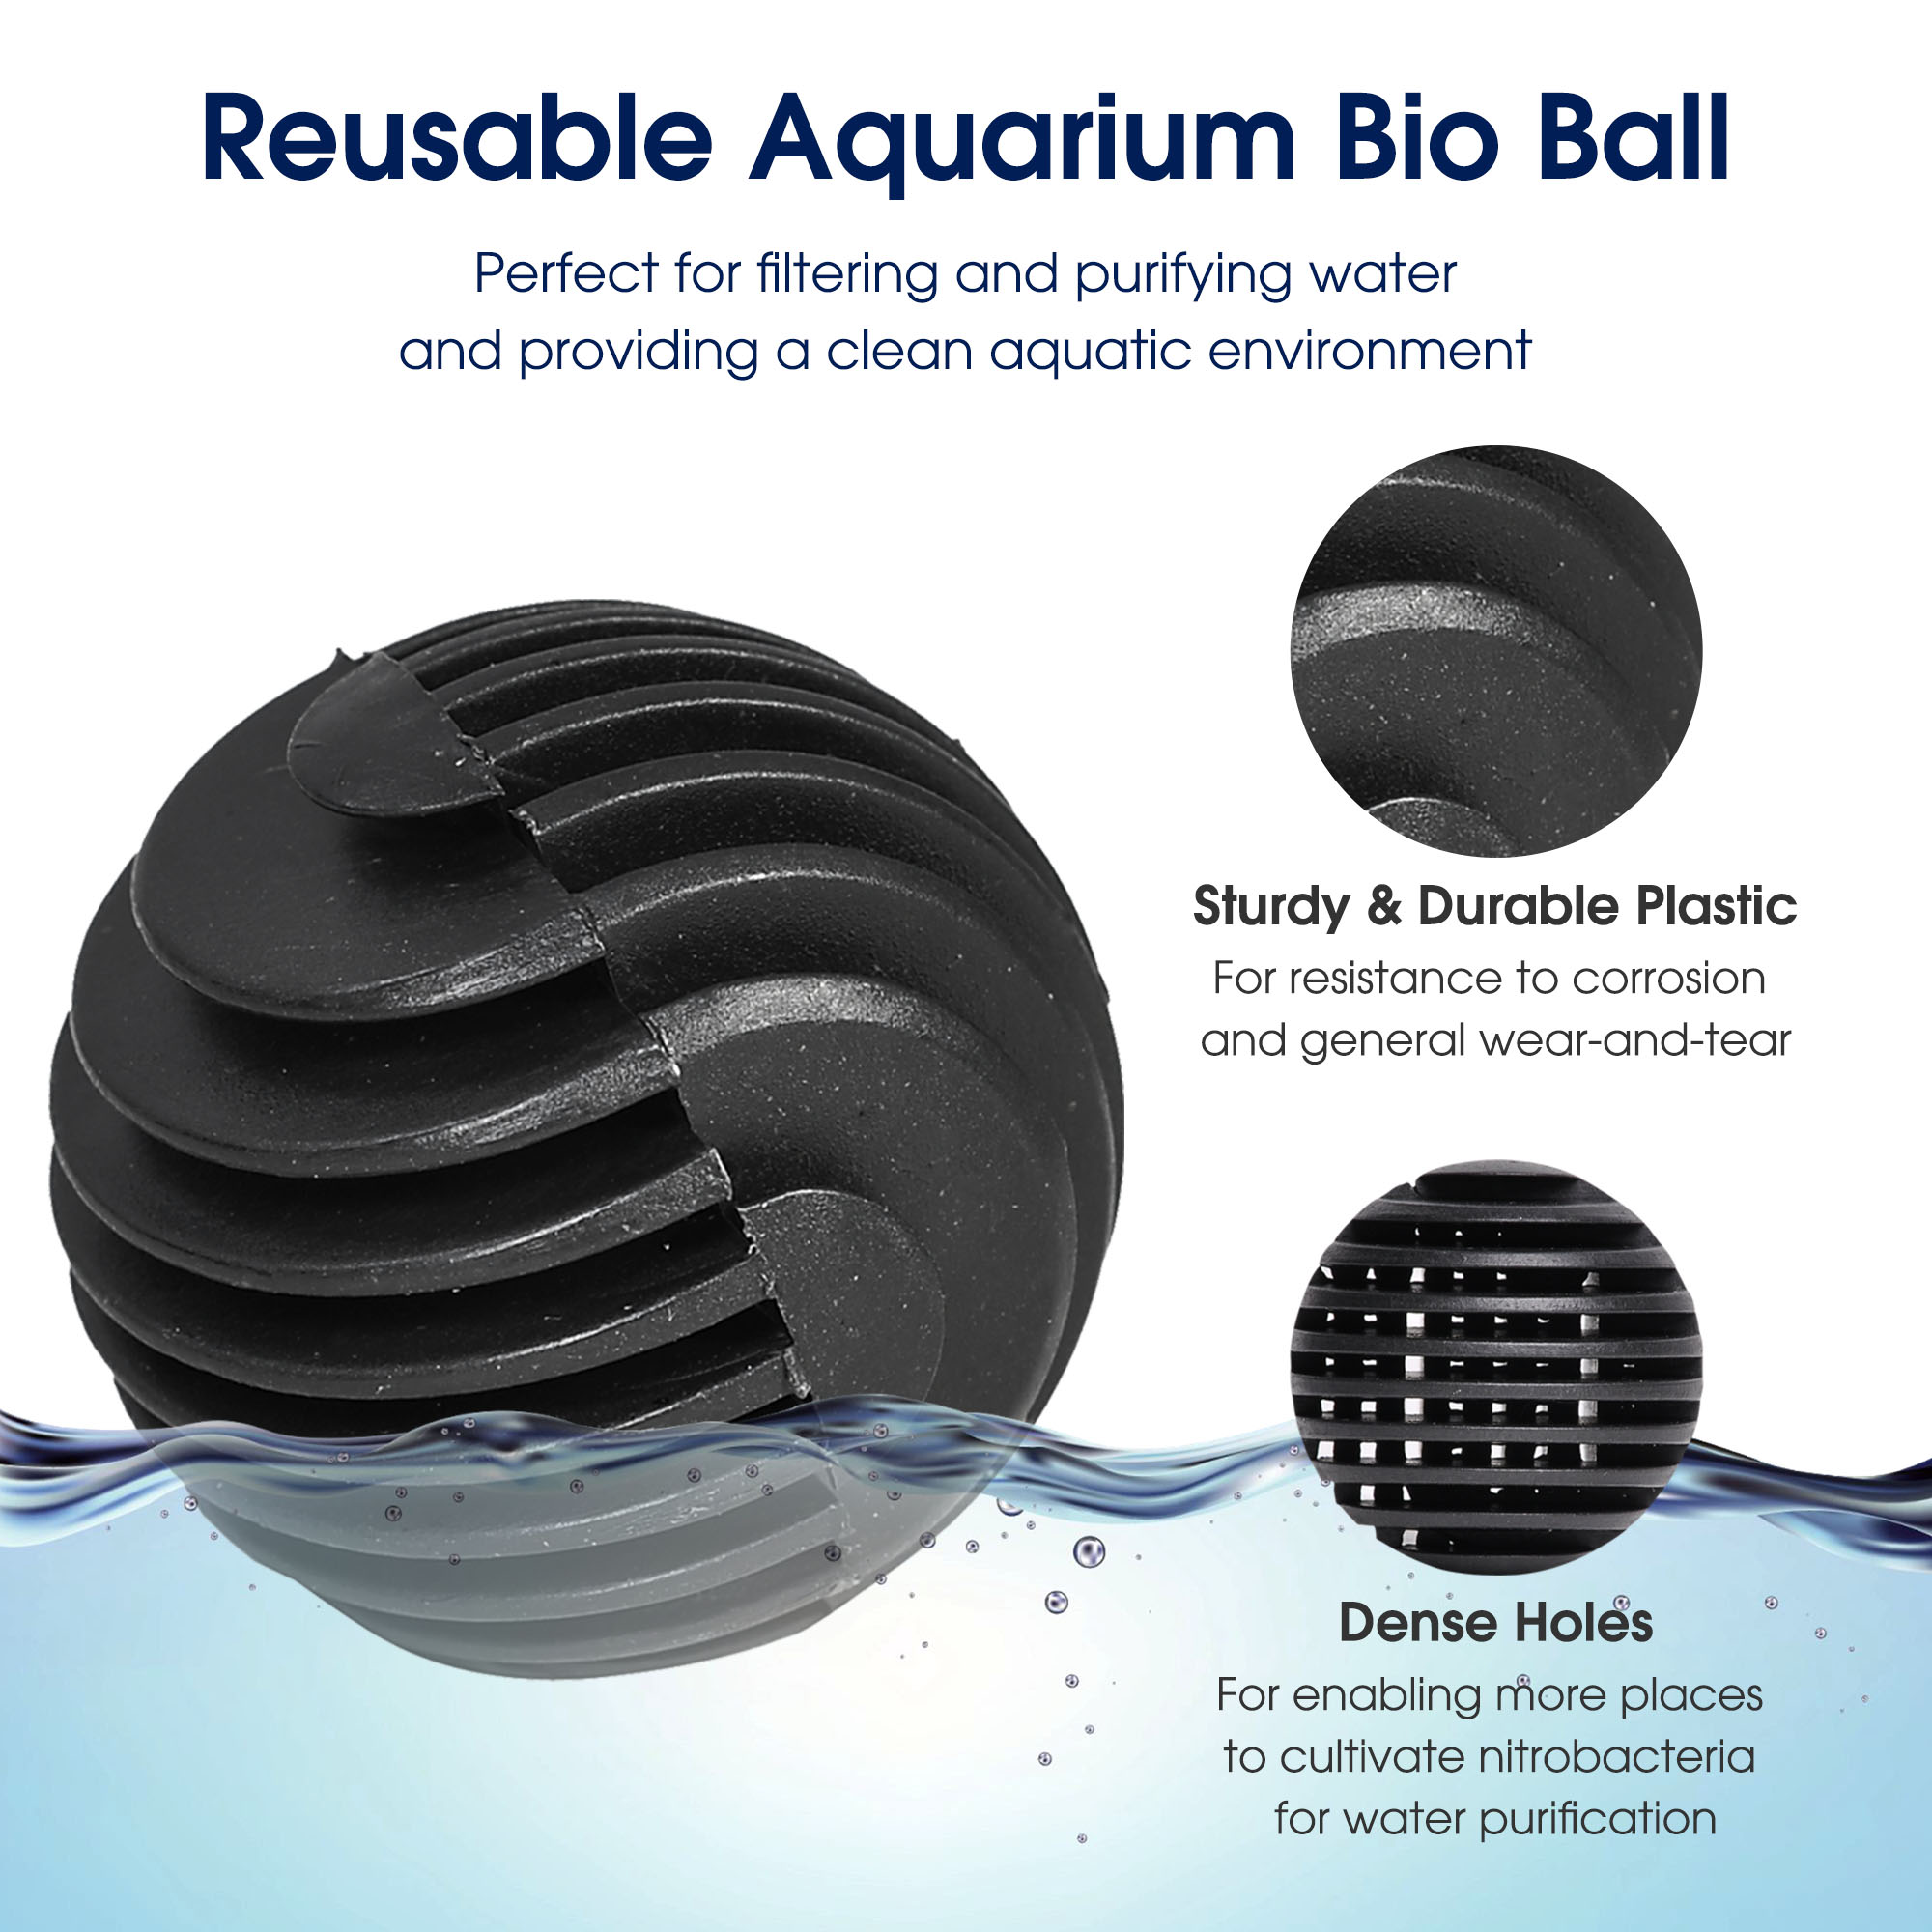 Yescom 400 Aquarium Reusable Bio Ball 1.2" Wet/Dry Filter Pond Fish Reef Tank Biofilter